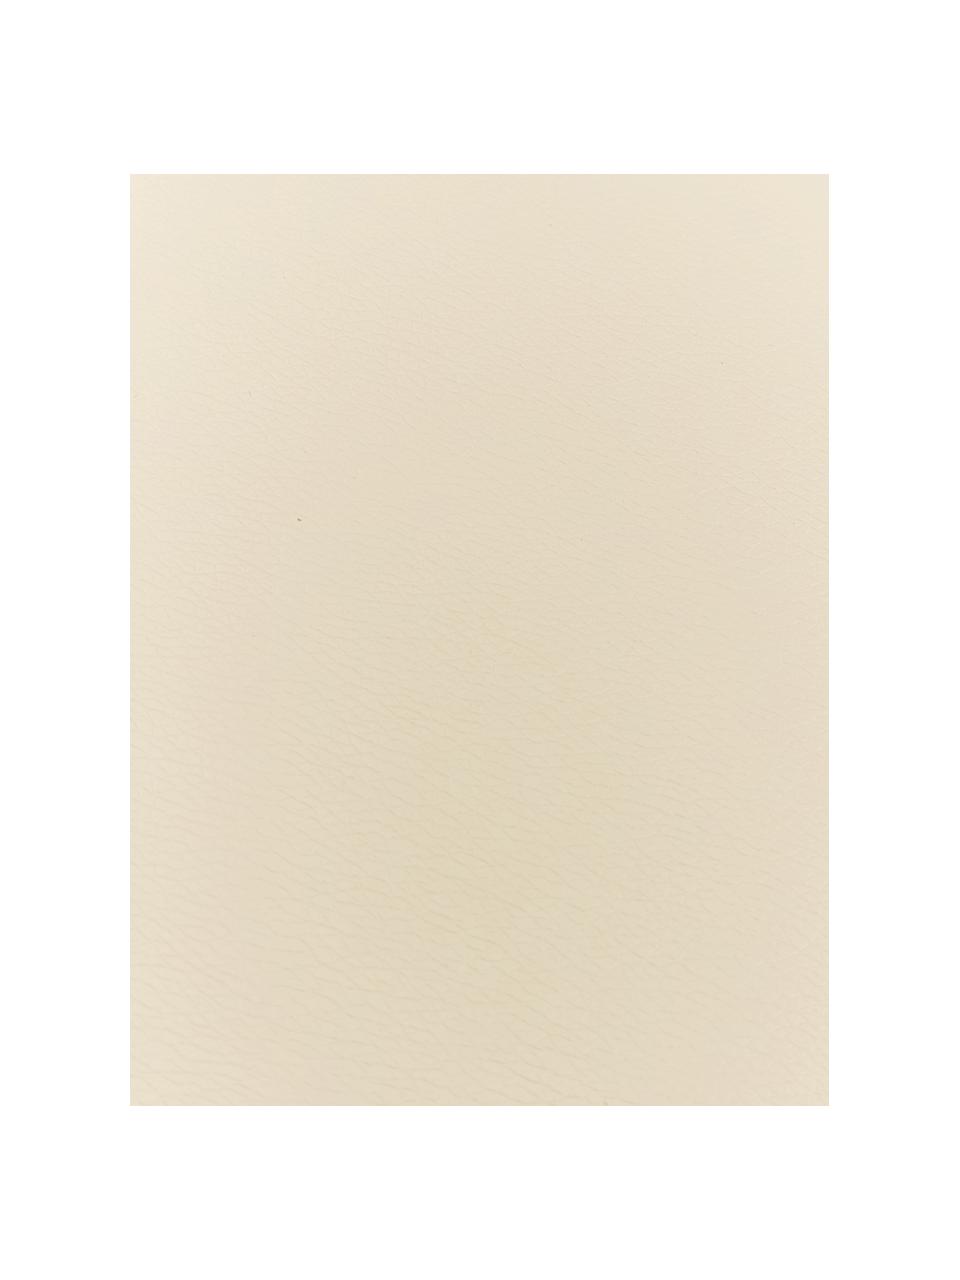 Tovaglietta americana in similpelle Pik 2 pz, Plastica (PVC), Beige chiaro, Larg. 33 x Lung. 46 cm